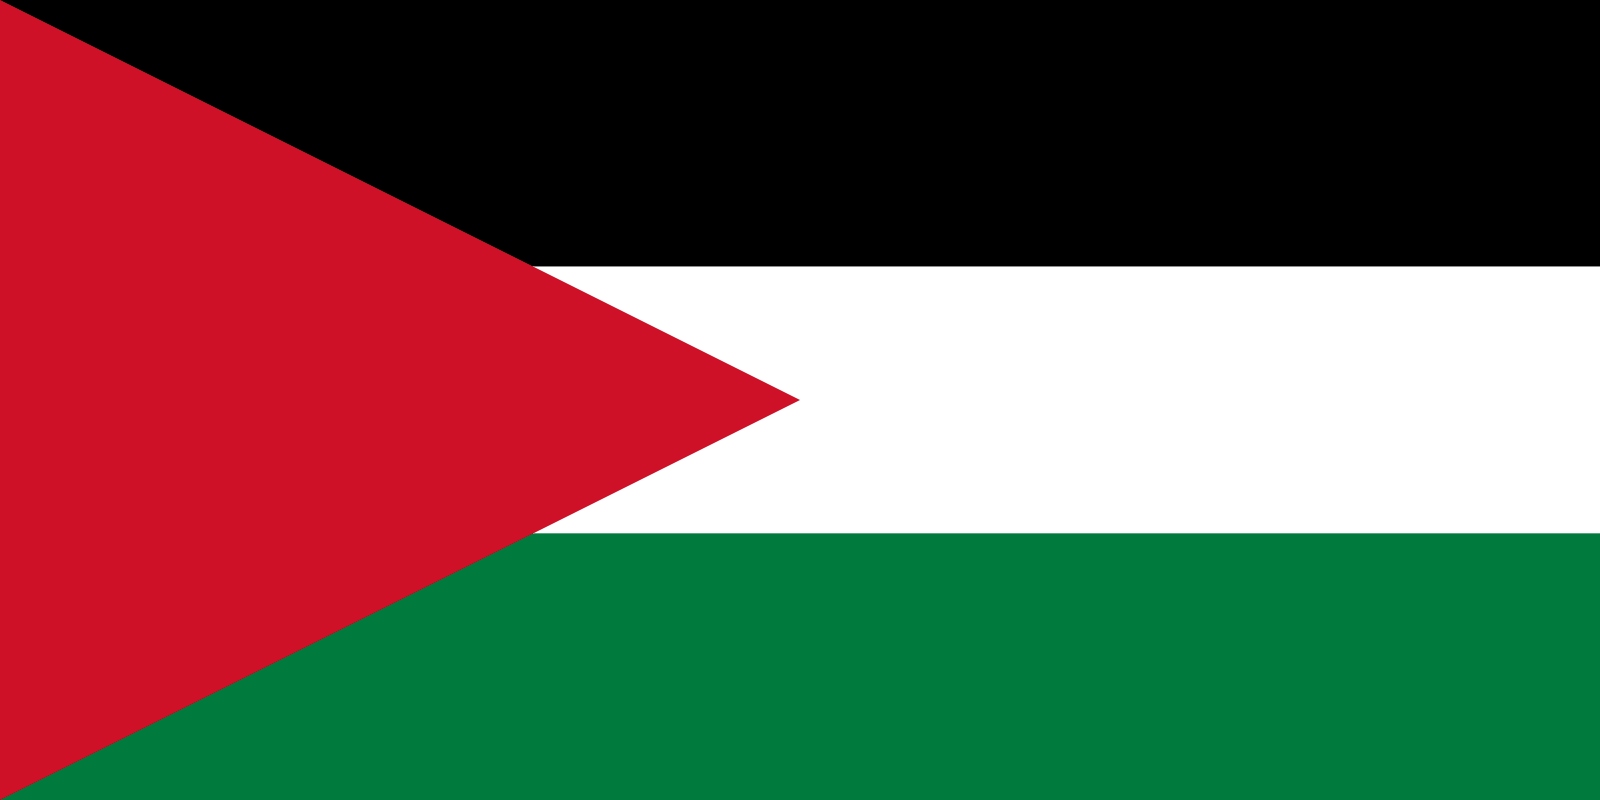 Palestinians